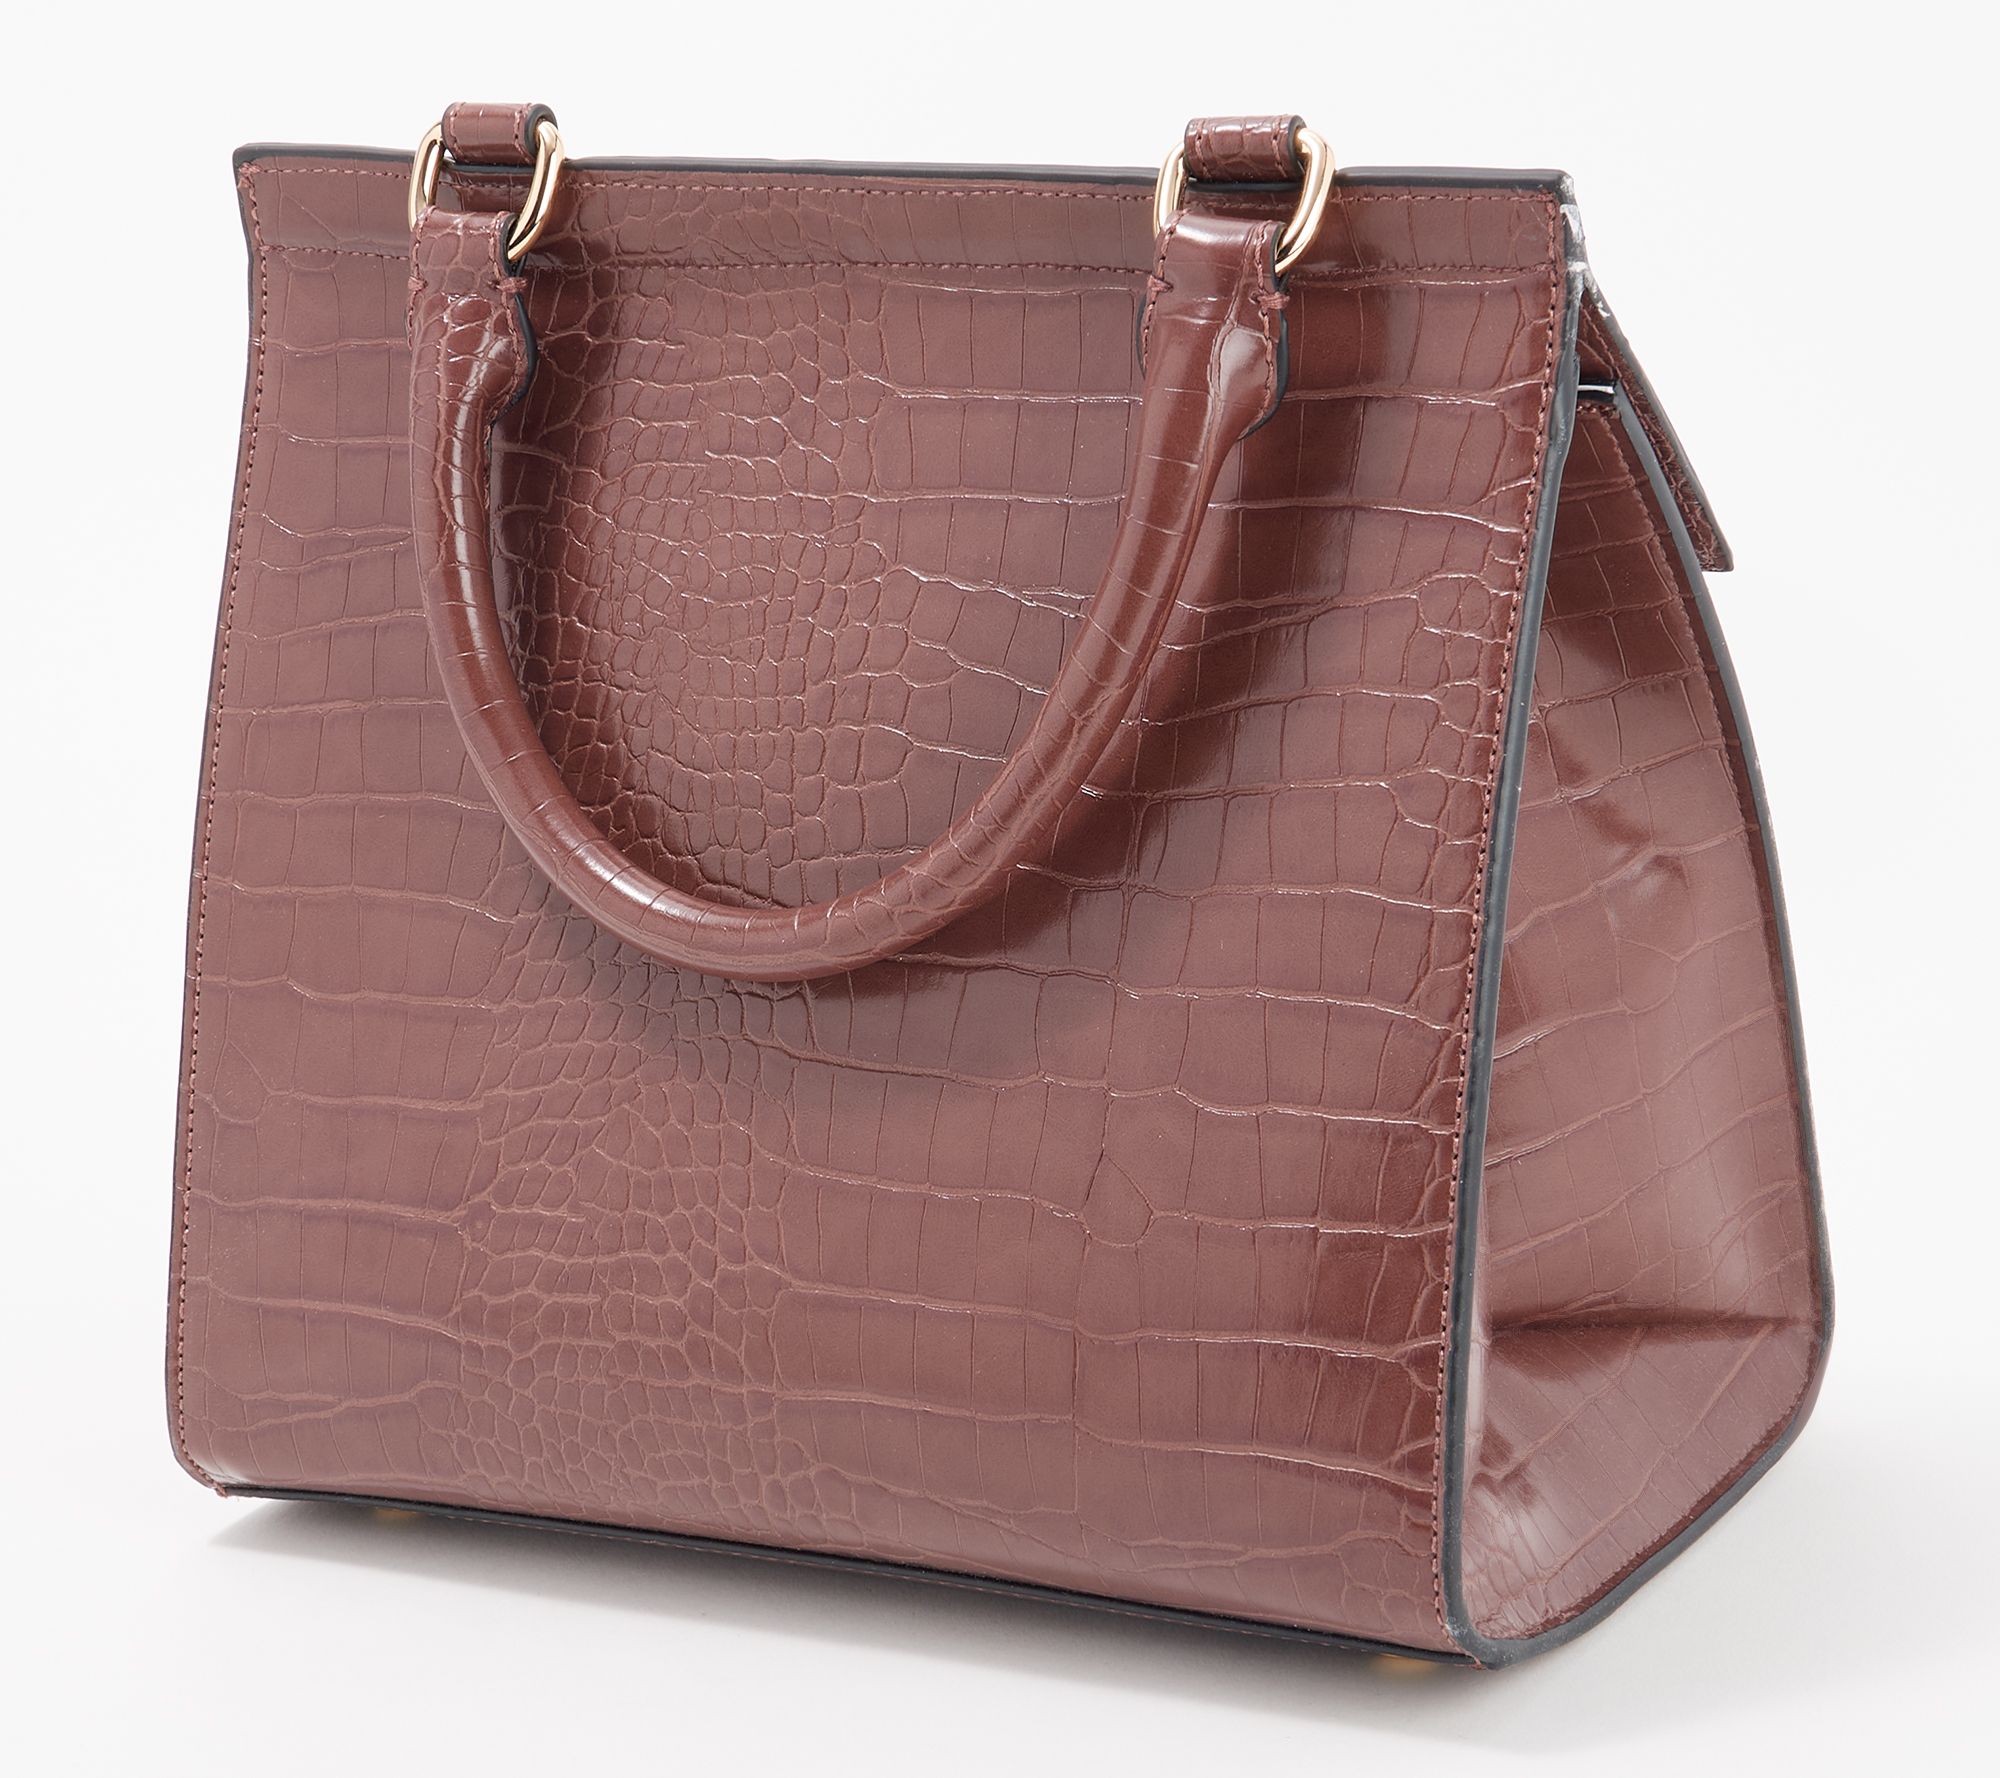 Simple Crocodile Embossed Handbag, Solid Color Satchel Bag, All